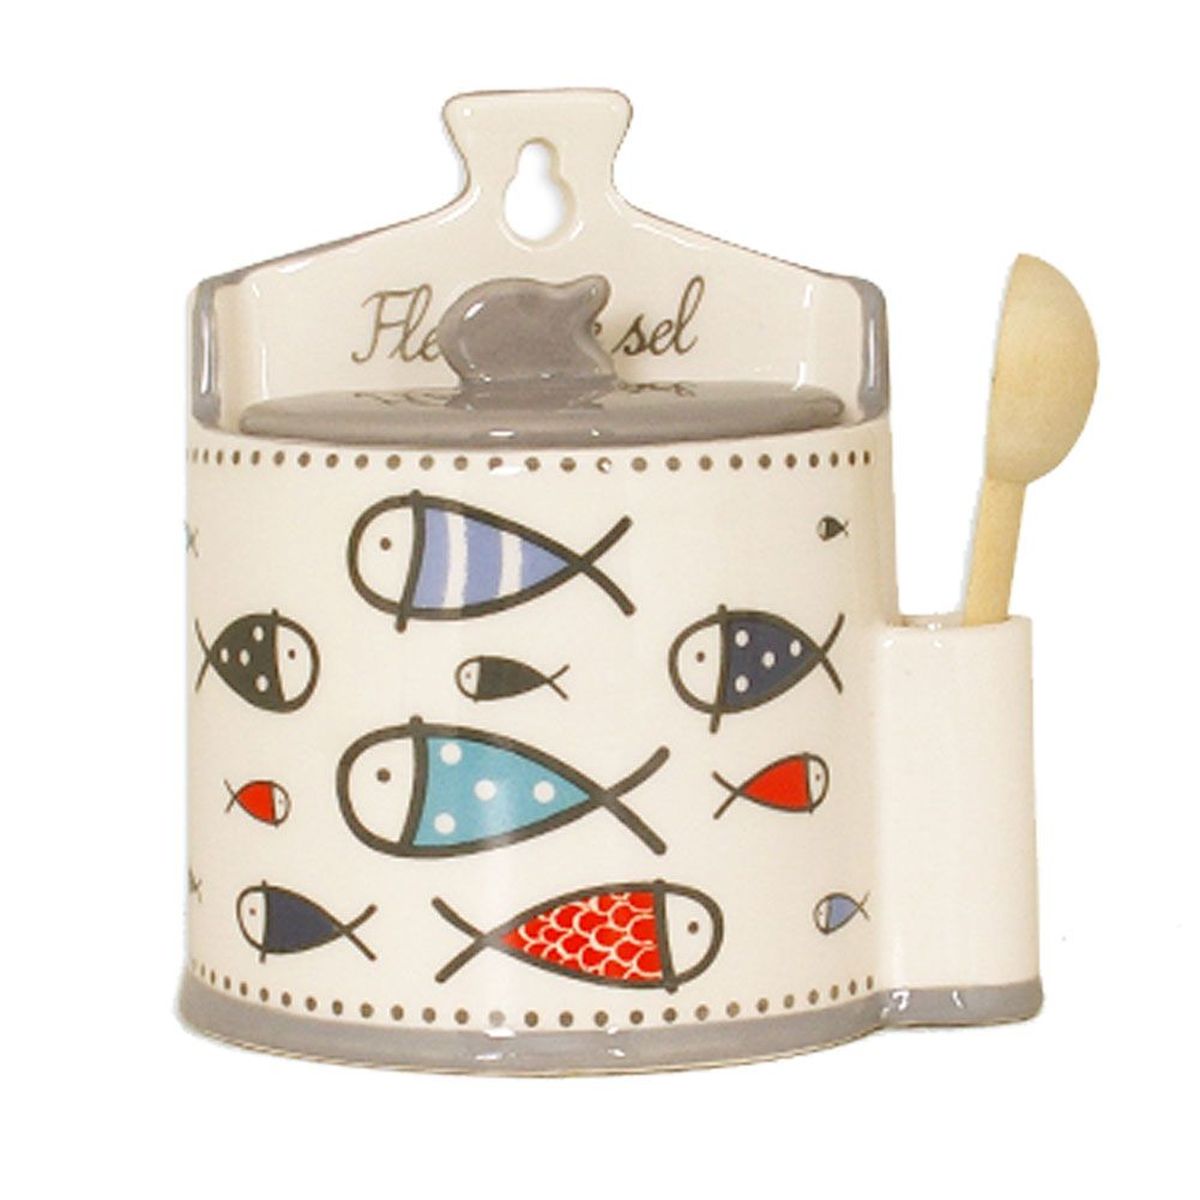 Ceramic salt box with spoon - INAYA BLUE